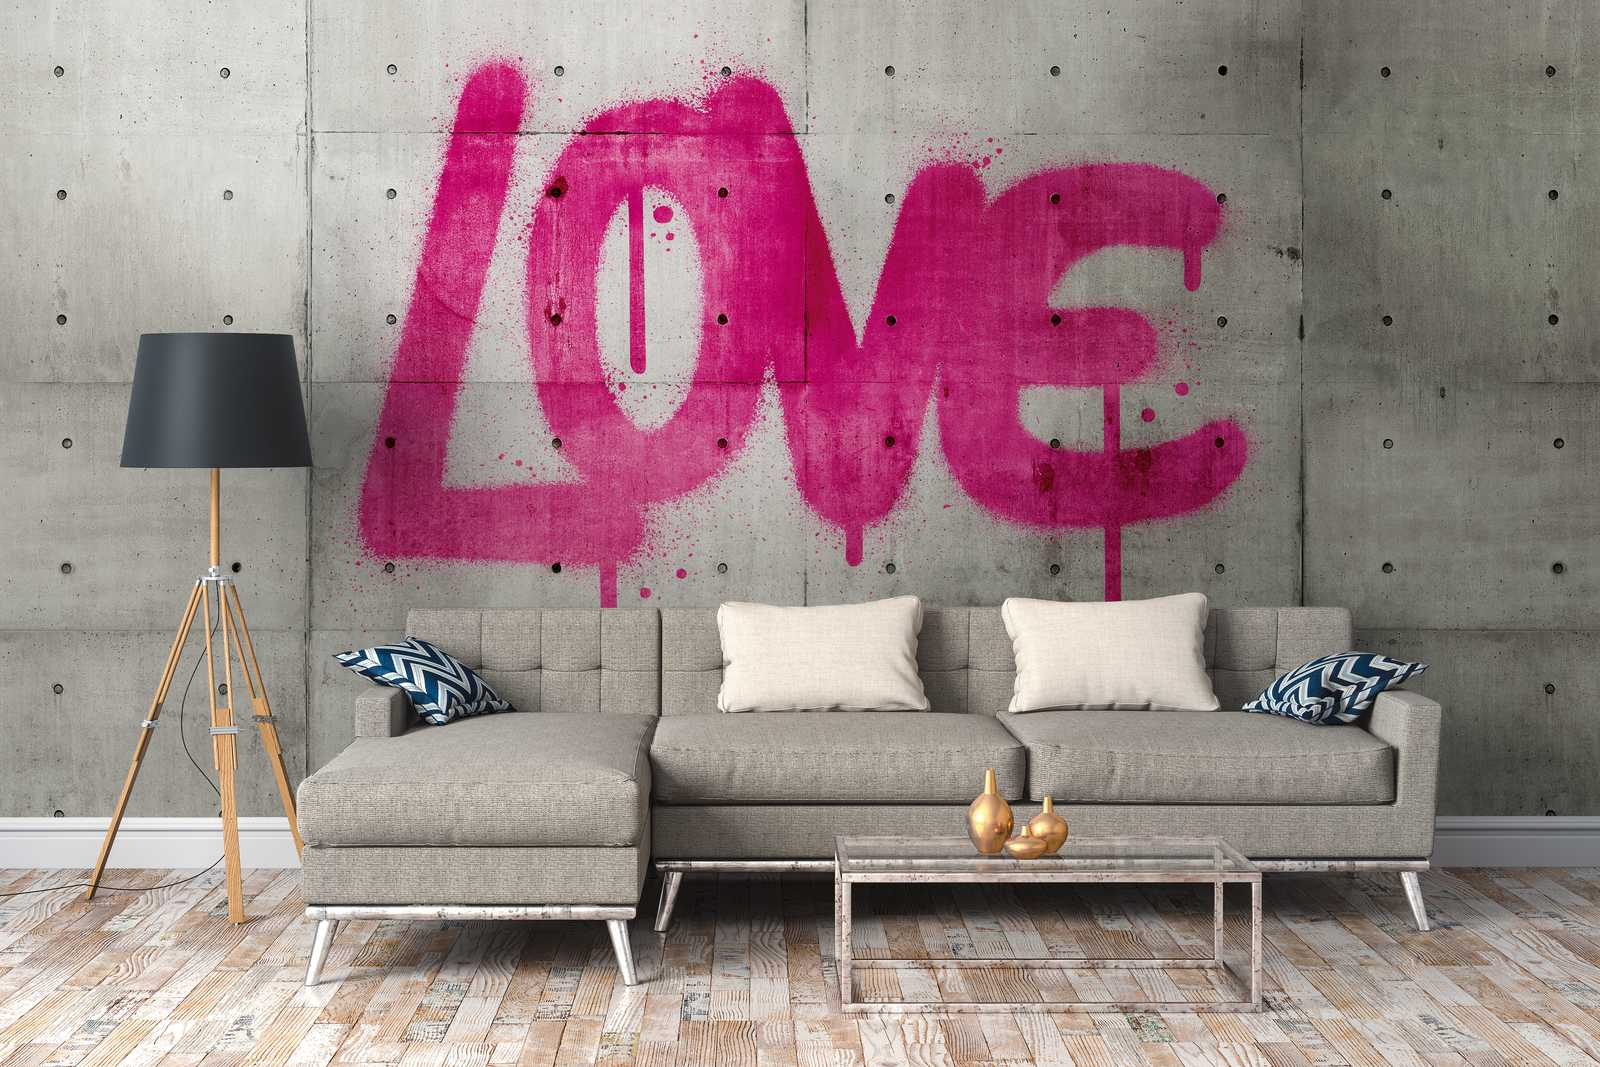             Tapeten Neuheit – Beton Motivtapete LOVE Graffiti, Grau & Pink
        